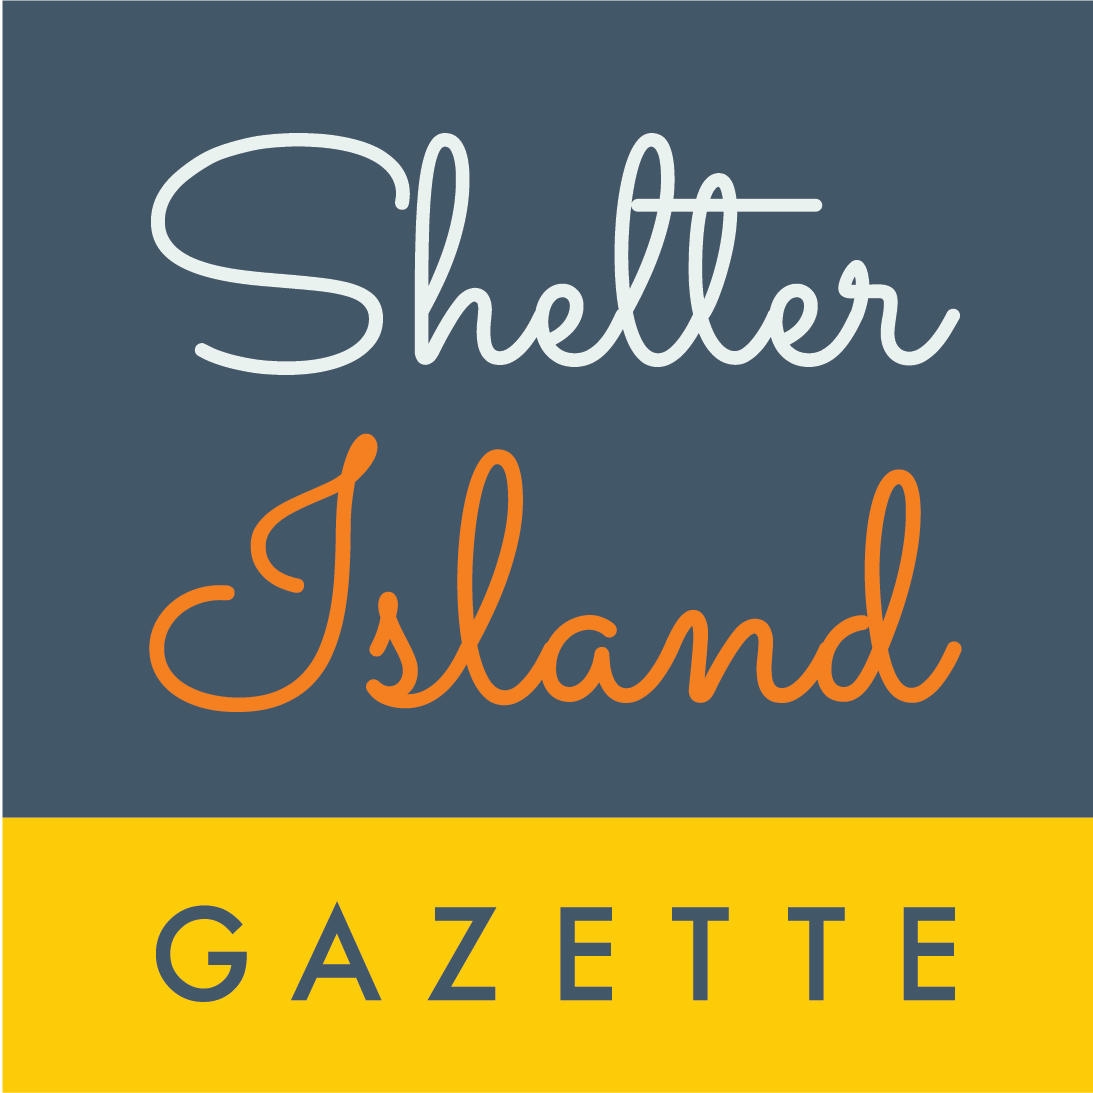 Shelter Island Gazette (Copy)